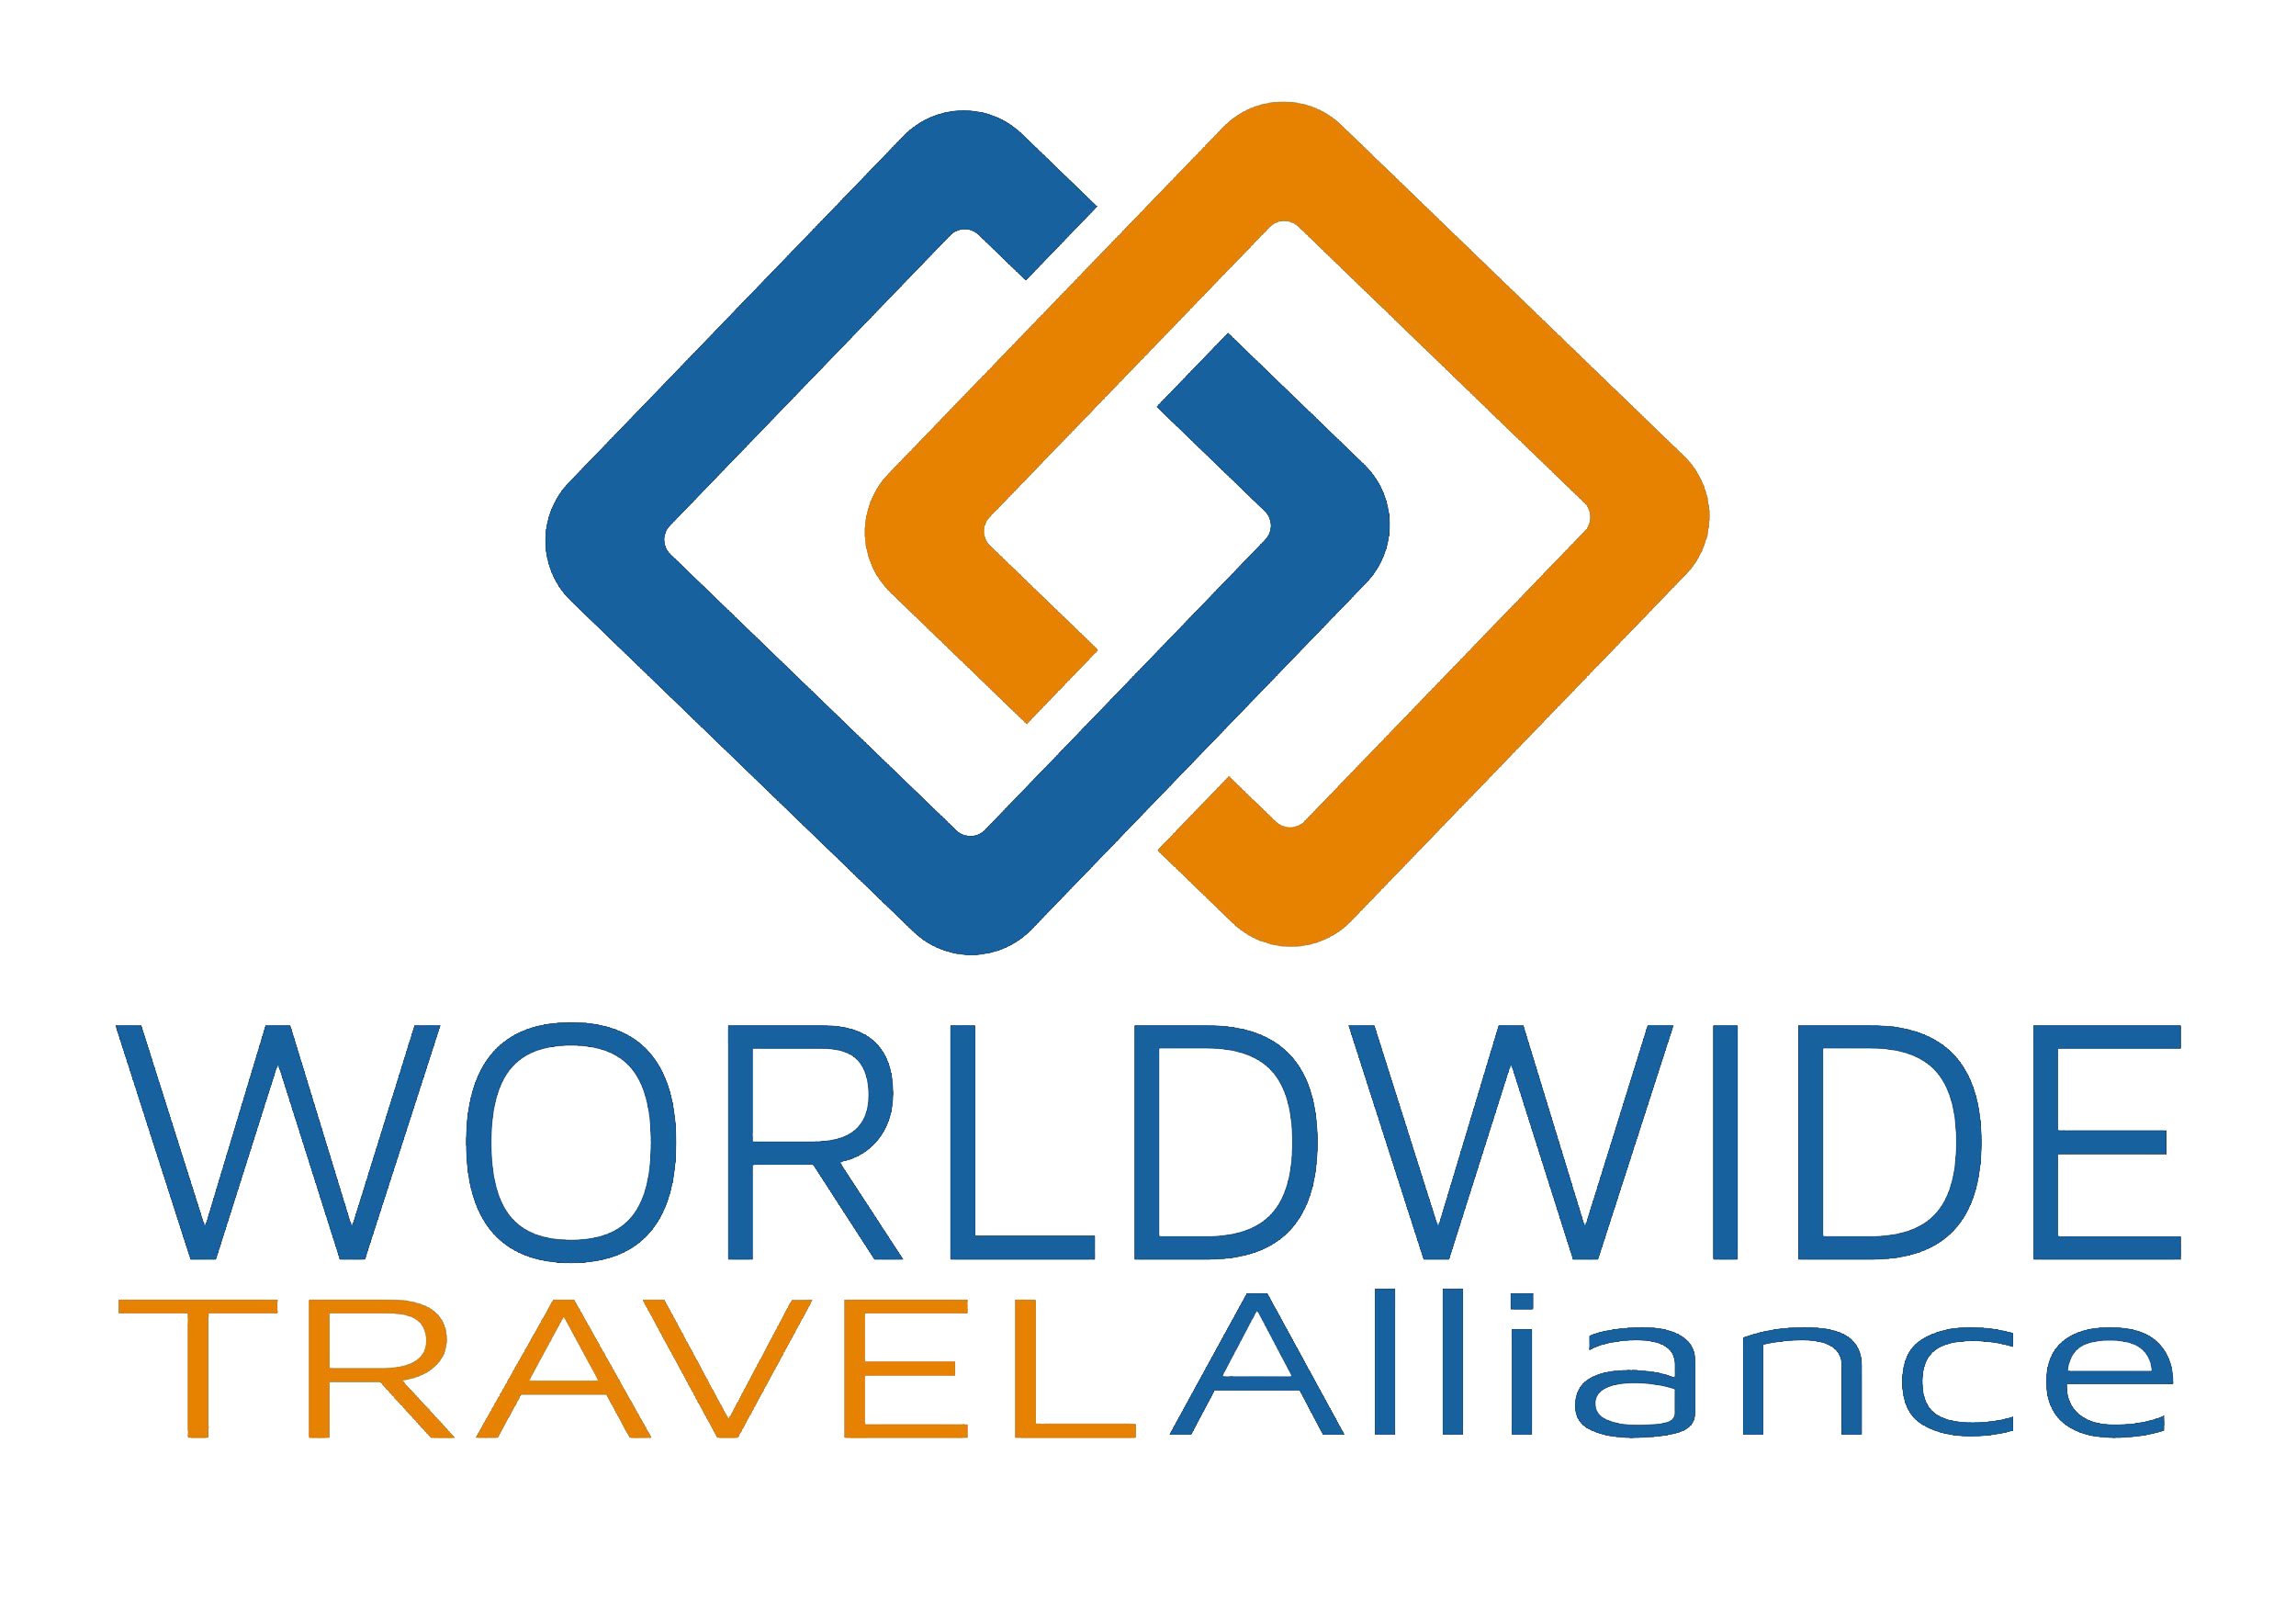 worldwide travel network